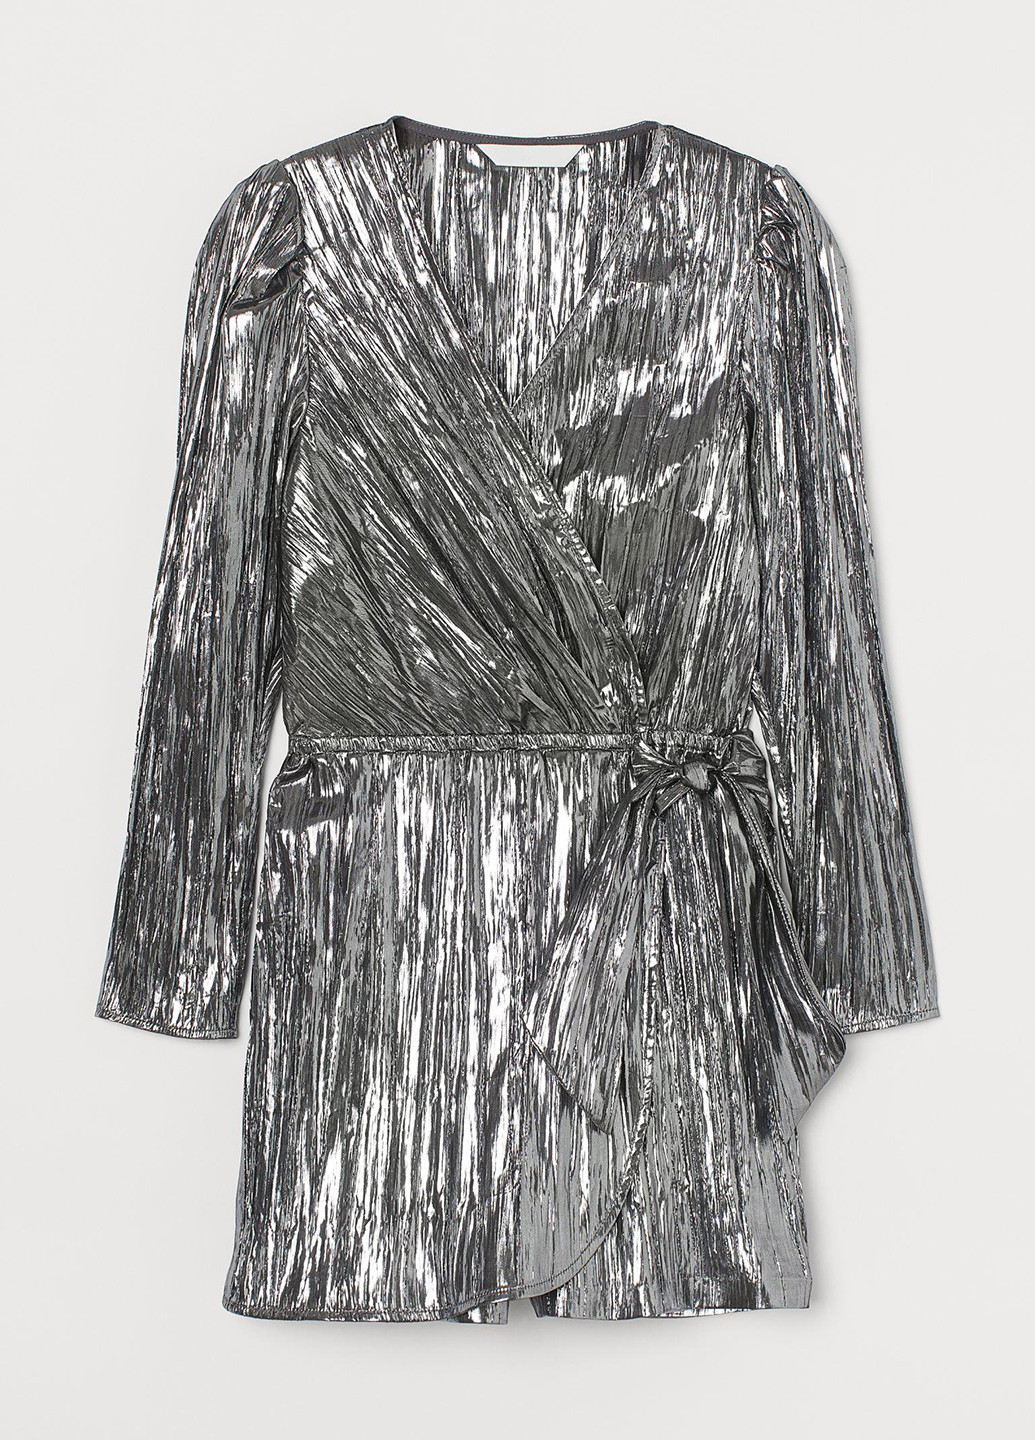 Комбінезон H&M комбинезон-шорты однотонный серебряный вечерний полиамид